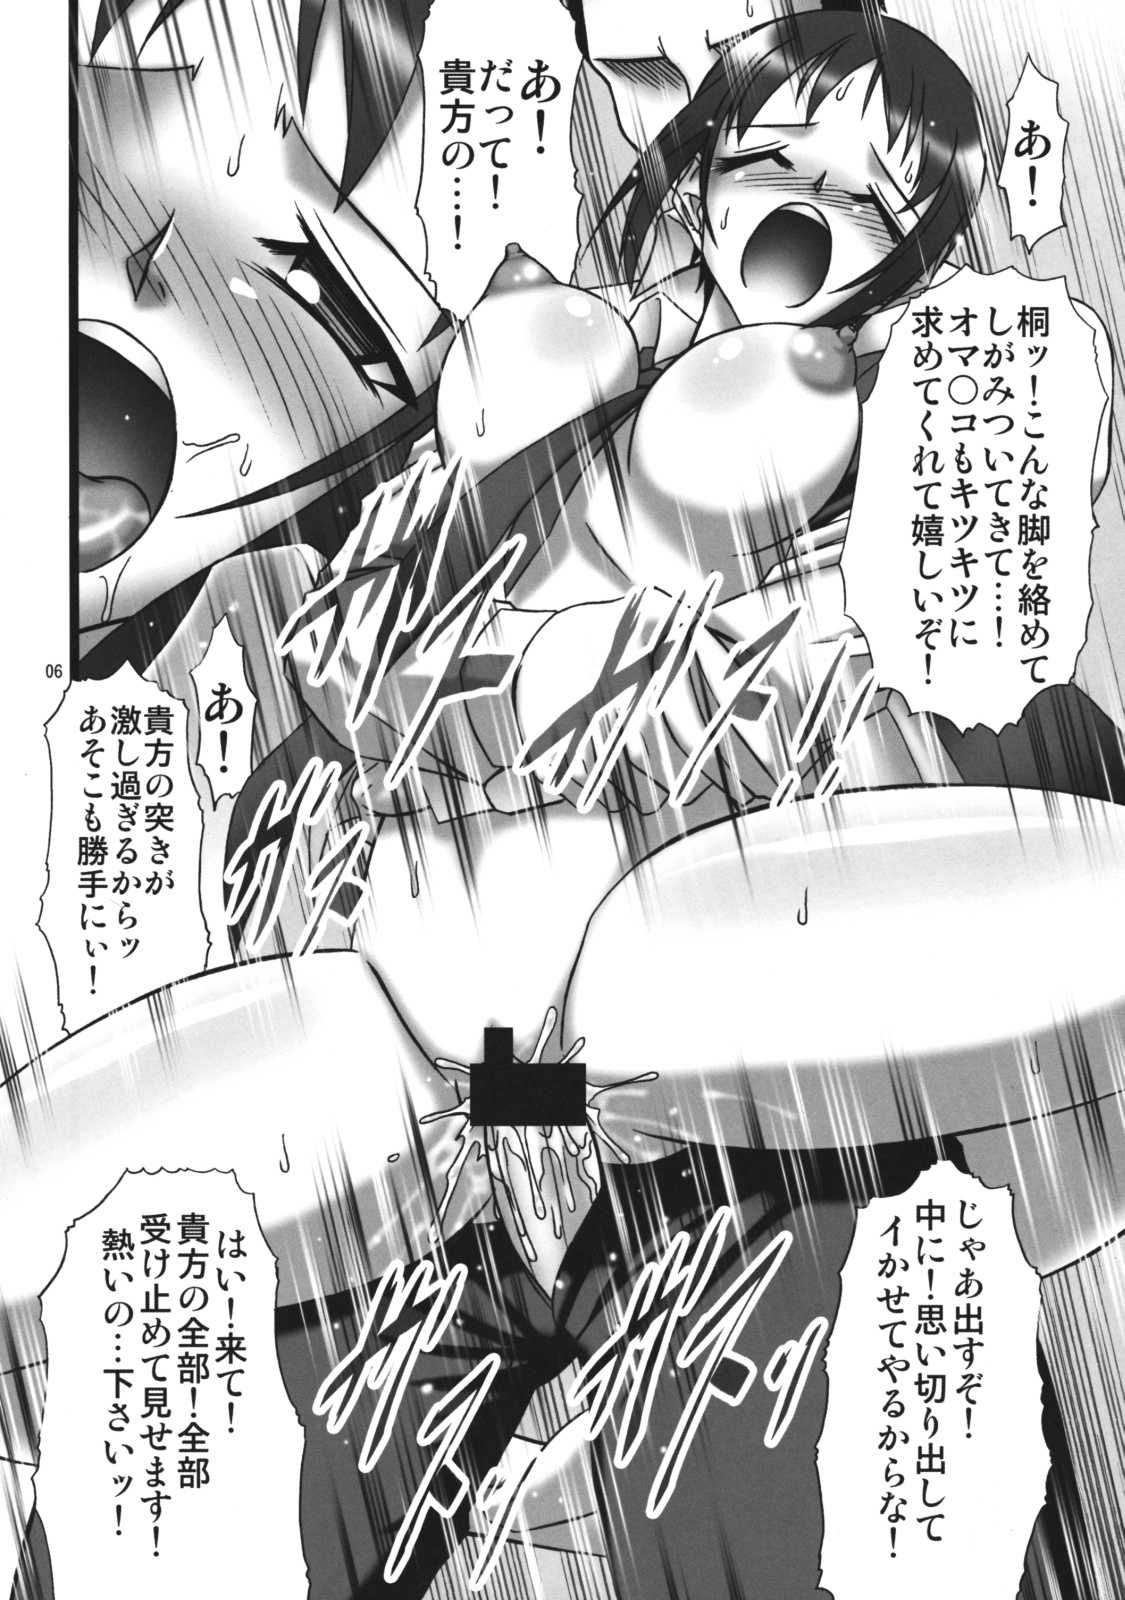 [AXZ] Angel&#039;s Stroke 26 - Kiri-chan, Cosplay Daisakusen! (Ga-Rei) [AXZ] 桐ちゃん、コスプレ大作戦!(Angel&#039;s stroke 26) (喰霊)